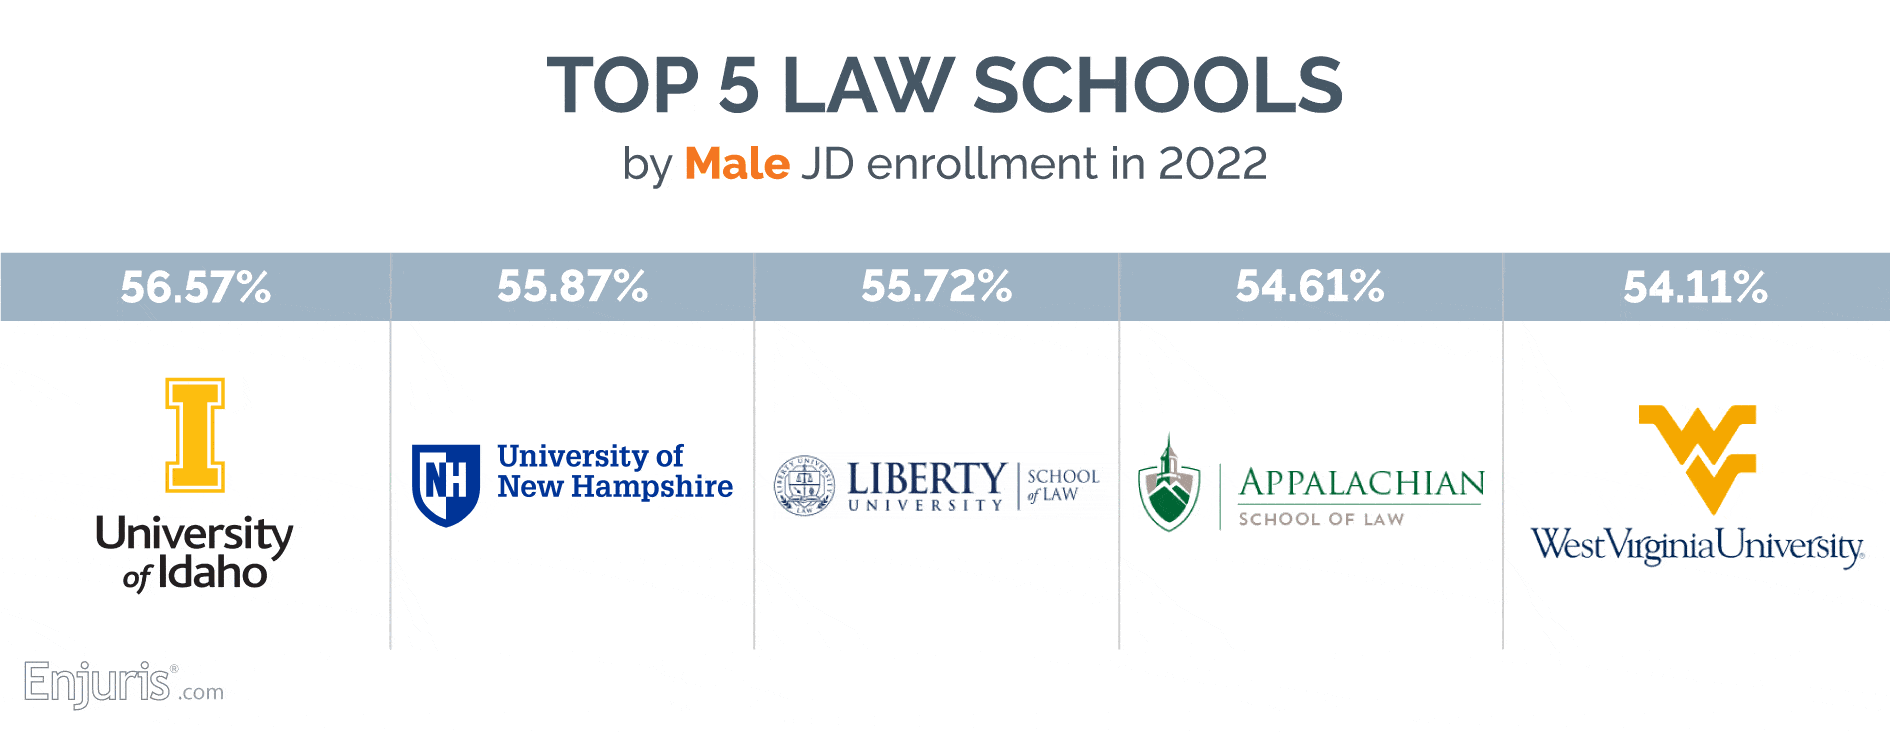 Top 5 law schools by male JD enrollment in 2022